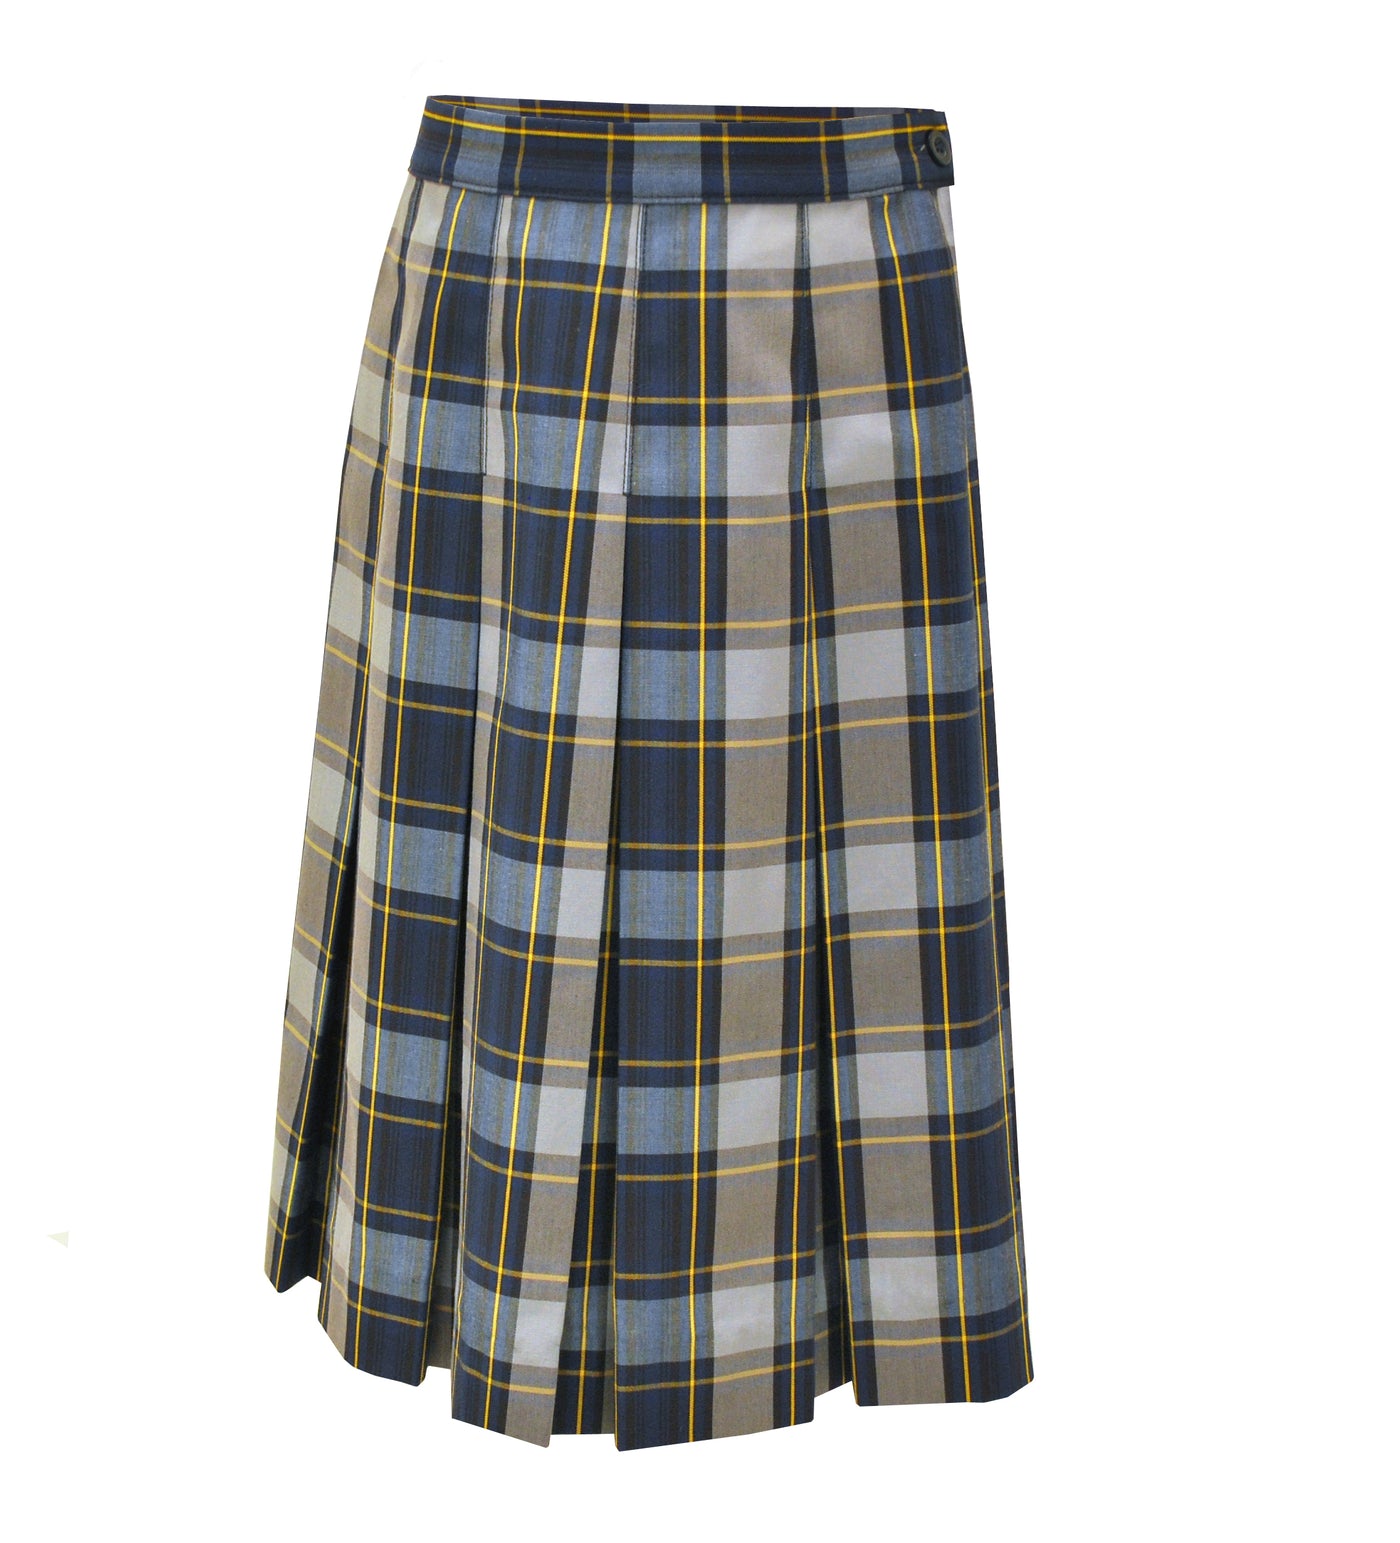 HRA plaid skirt